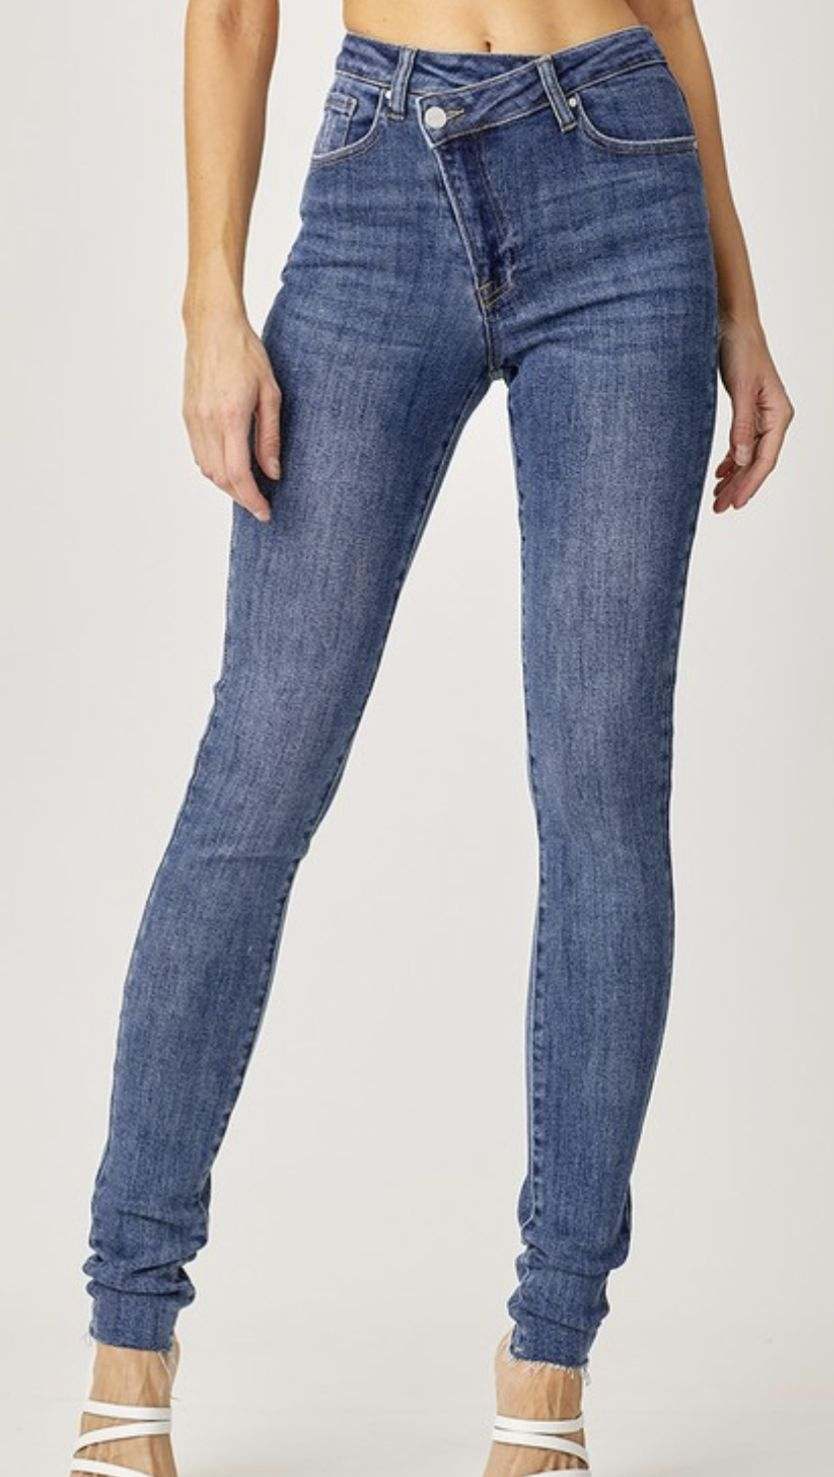 Risen skinny jeans #s293